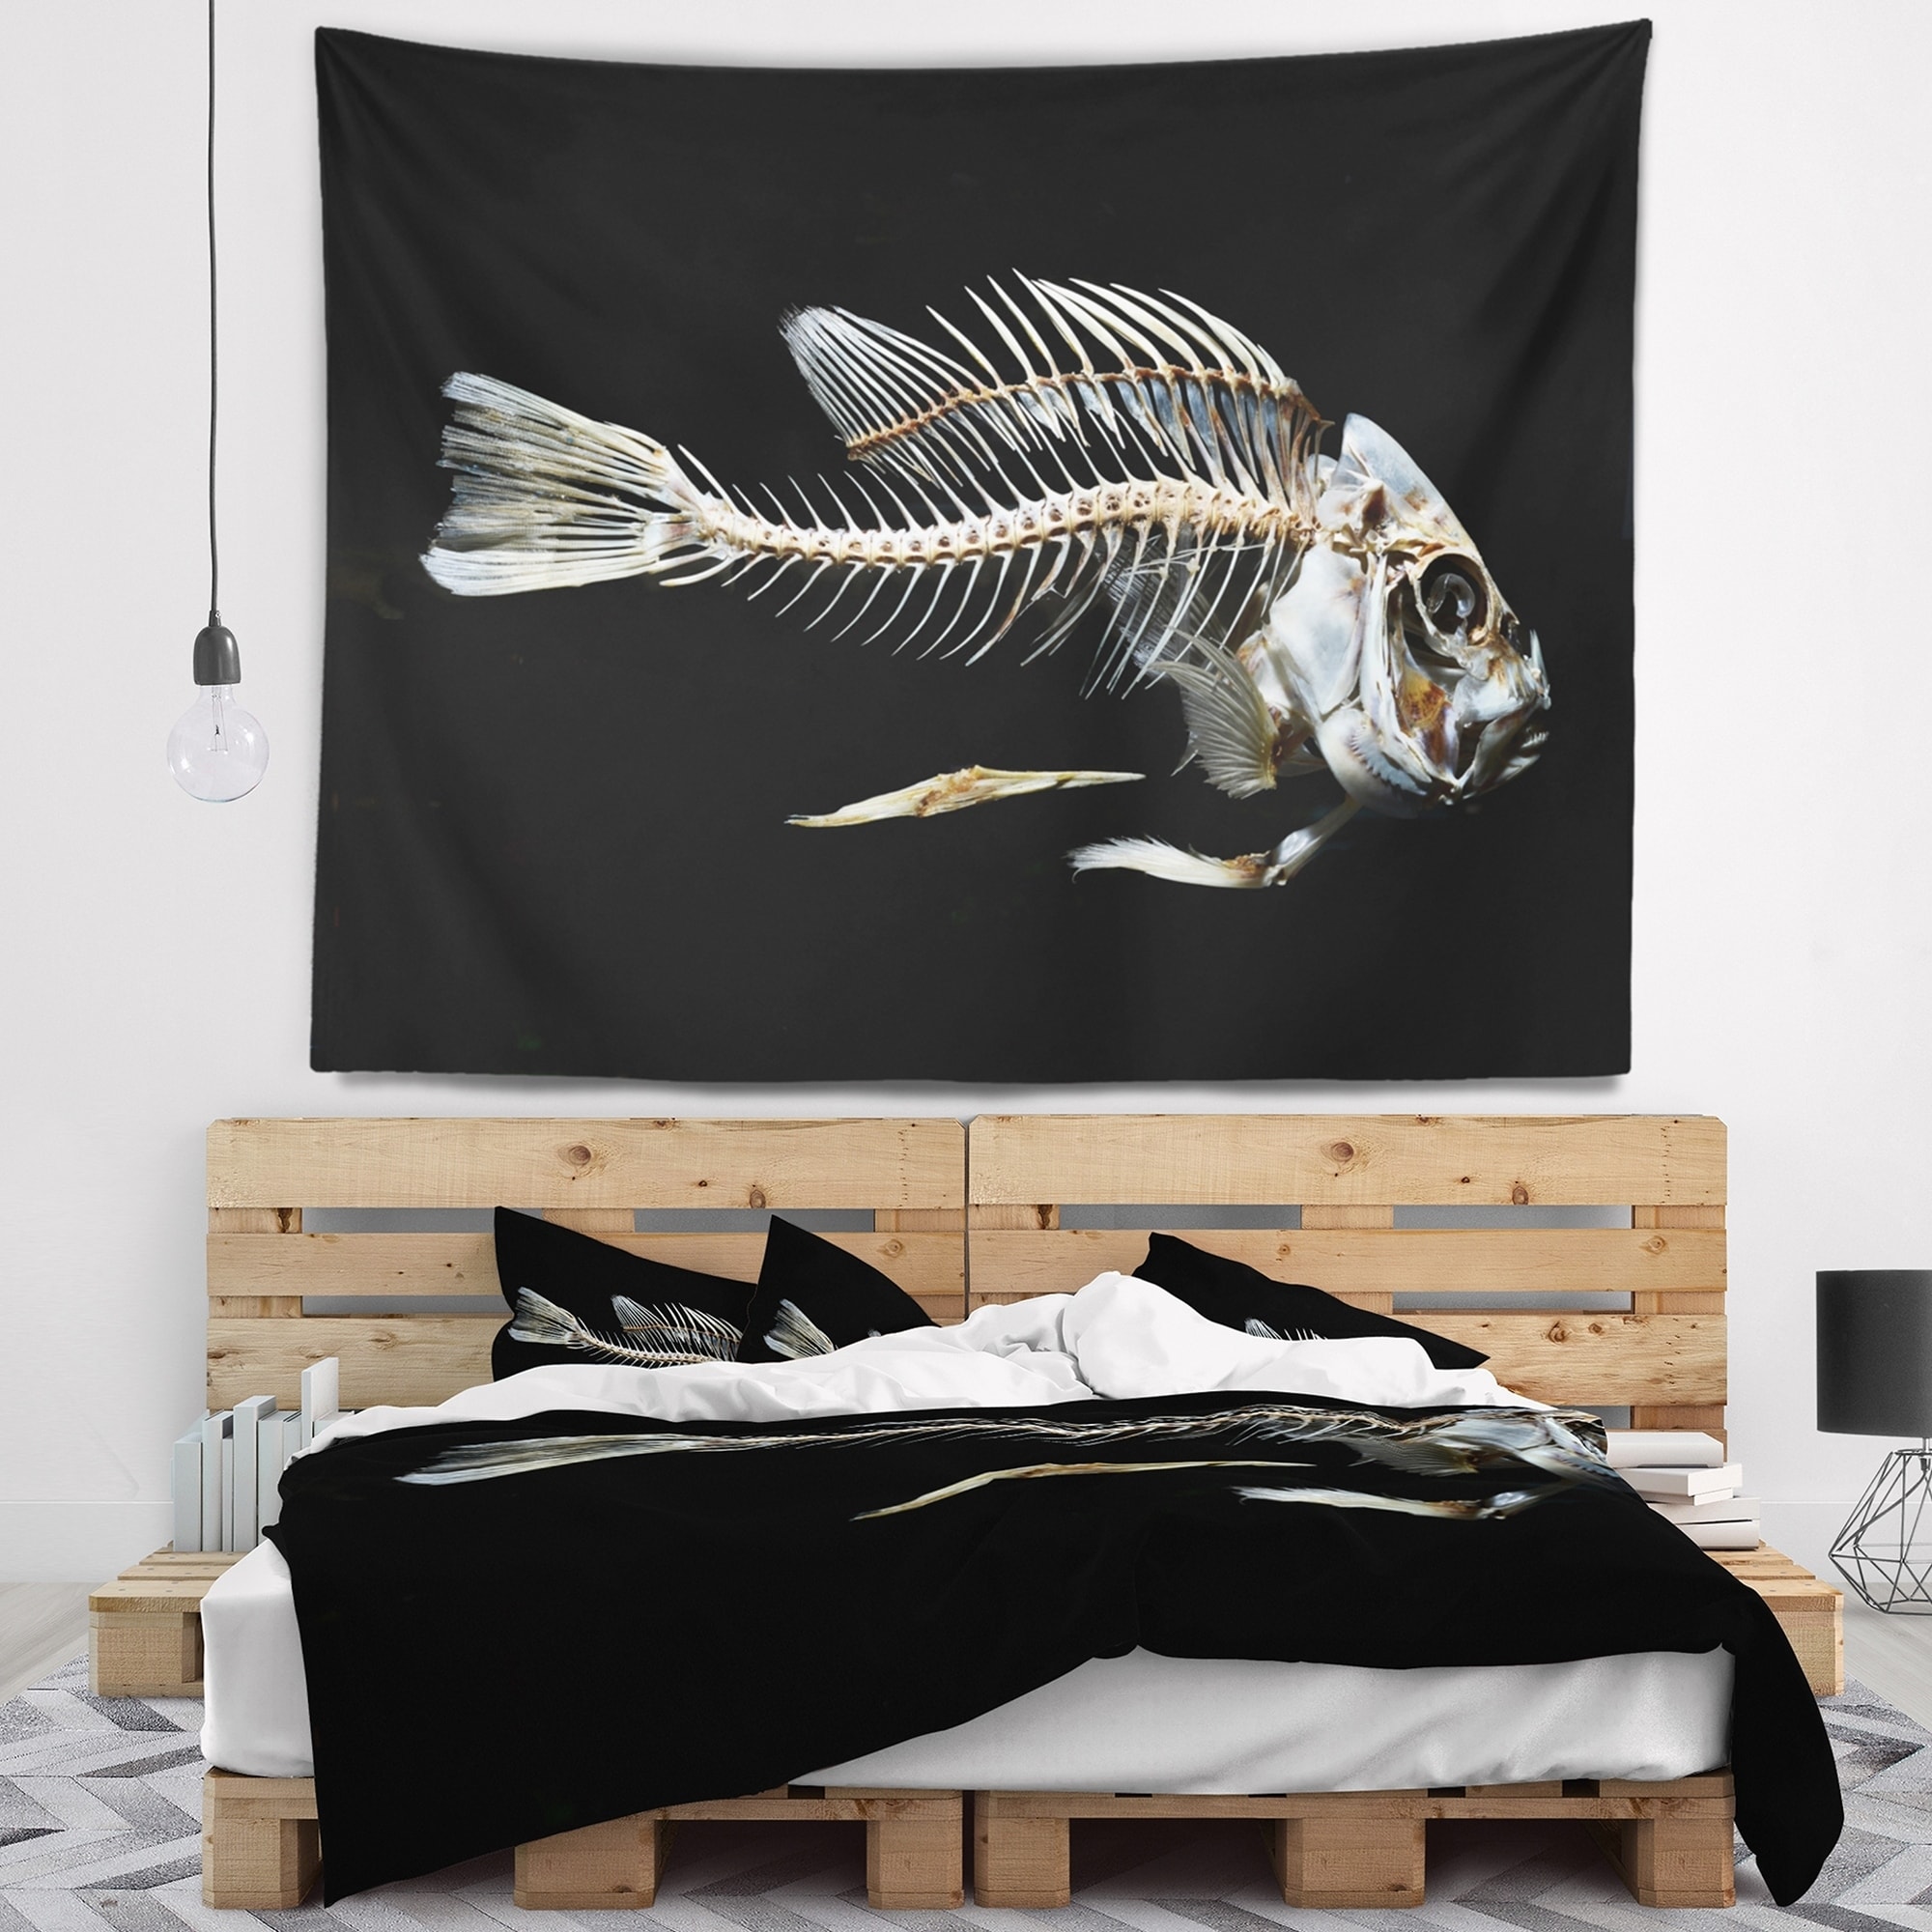 Designart 'Fish Skeleton Bone on Black' Animal Wall Tapestry - Bed